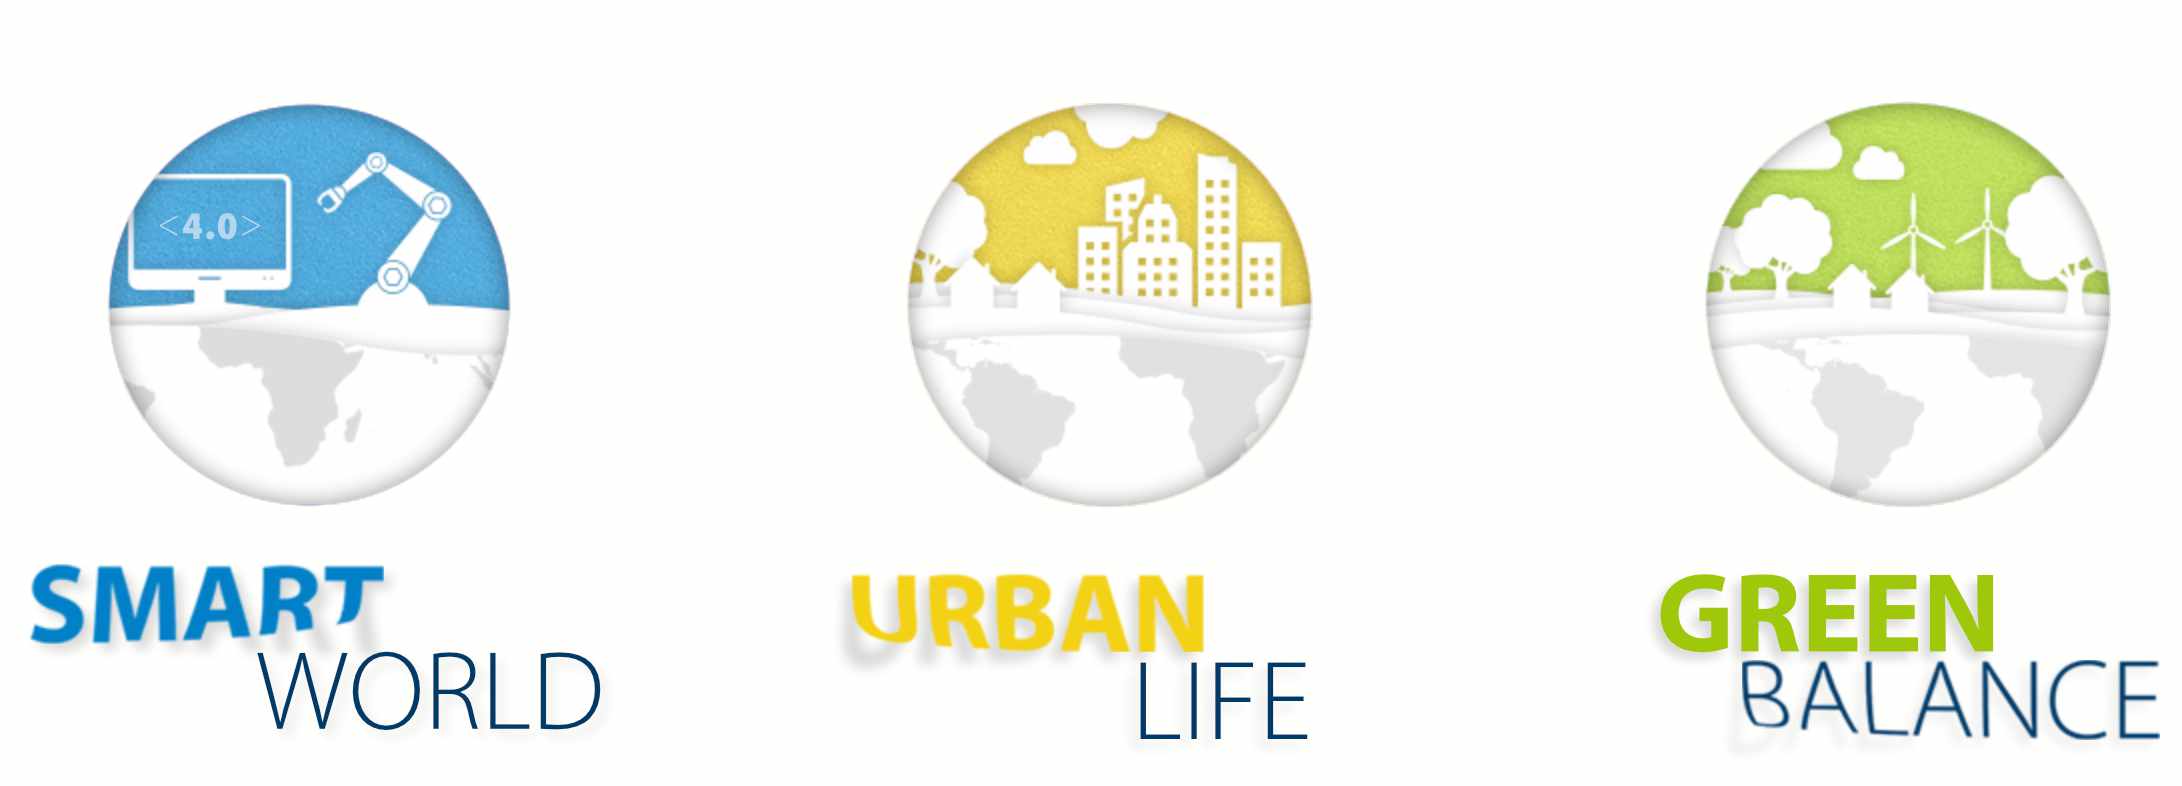 Icons Smart World, Urban Life, Green Balance